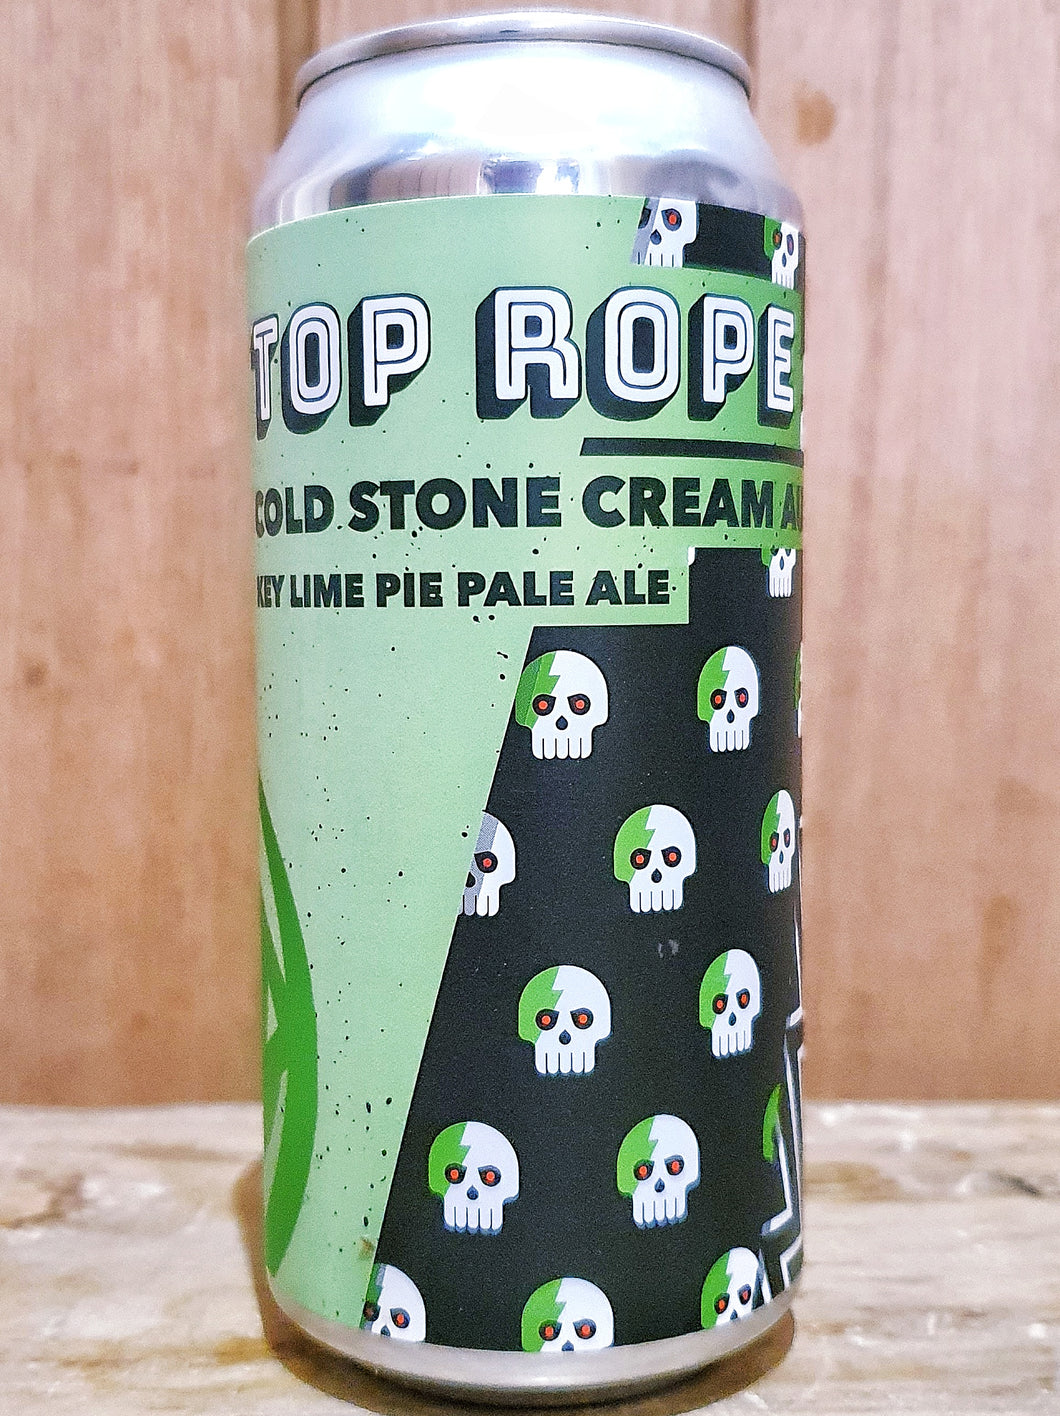 Top Rope - Cold Stone Cream Austin: Key Lime Pie